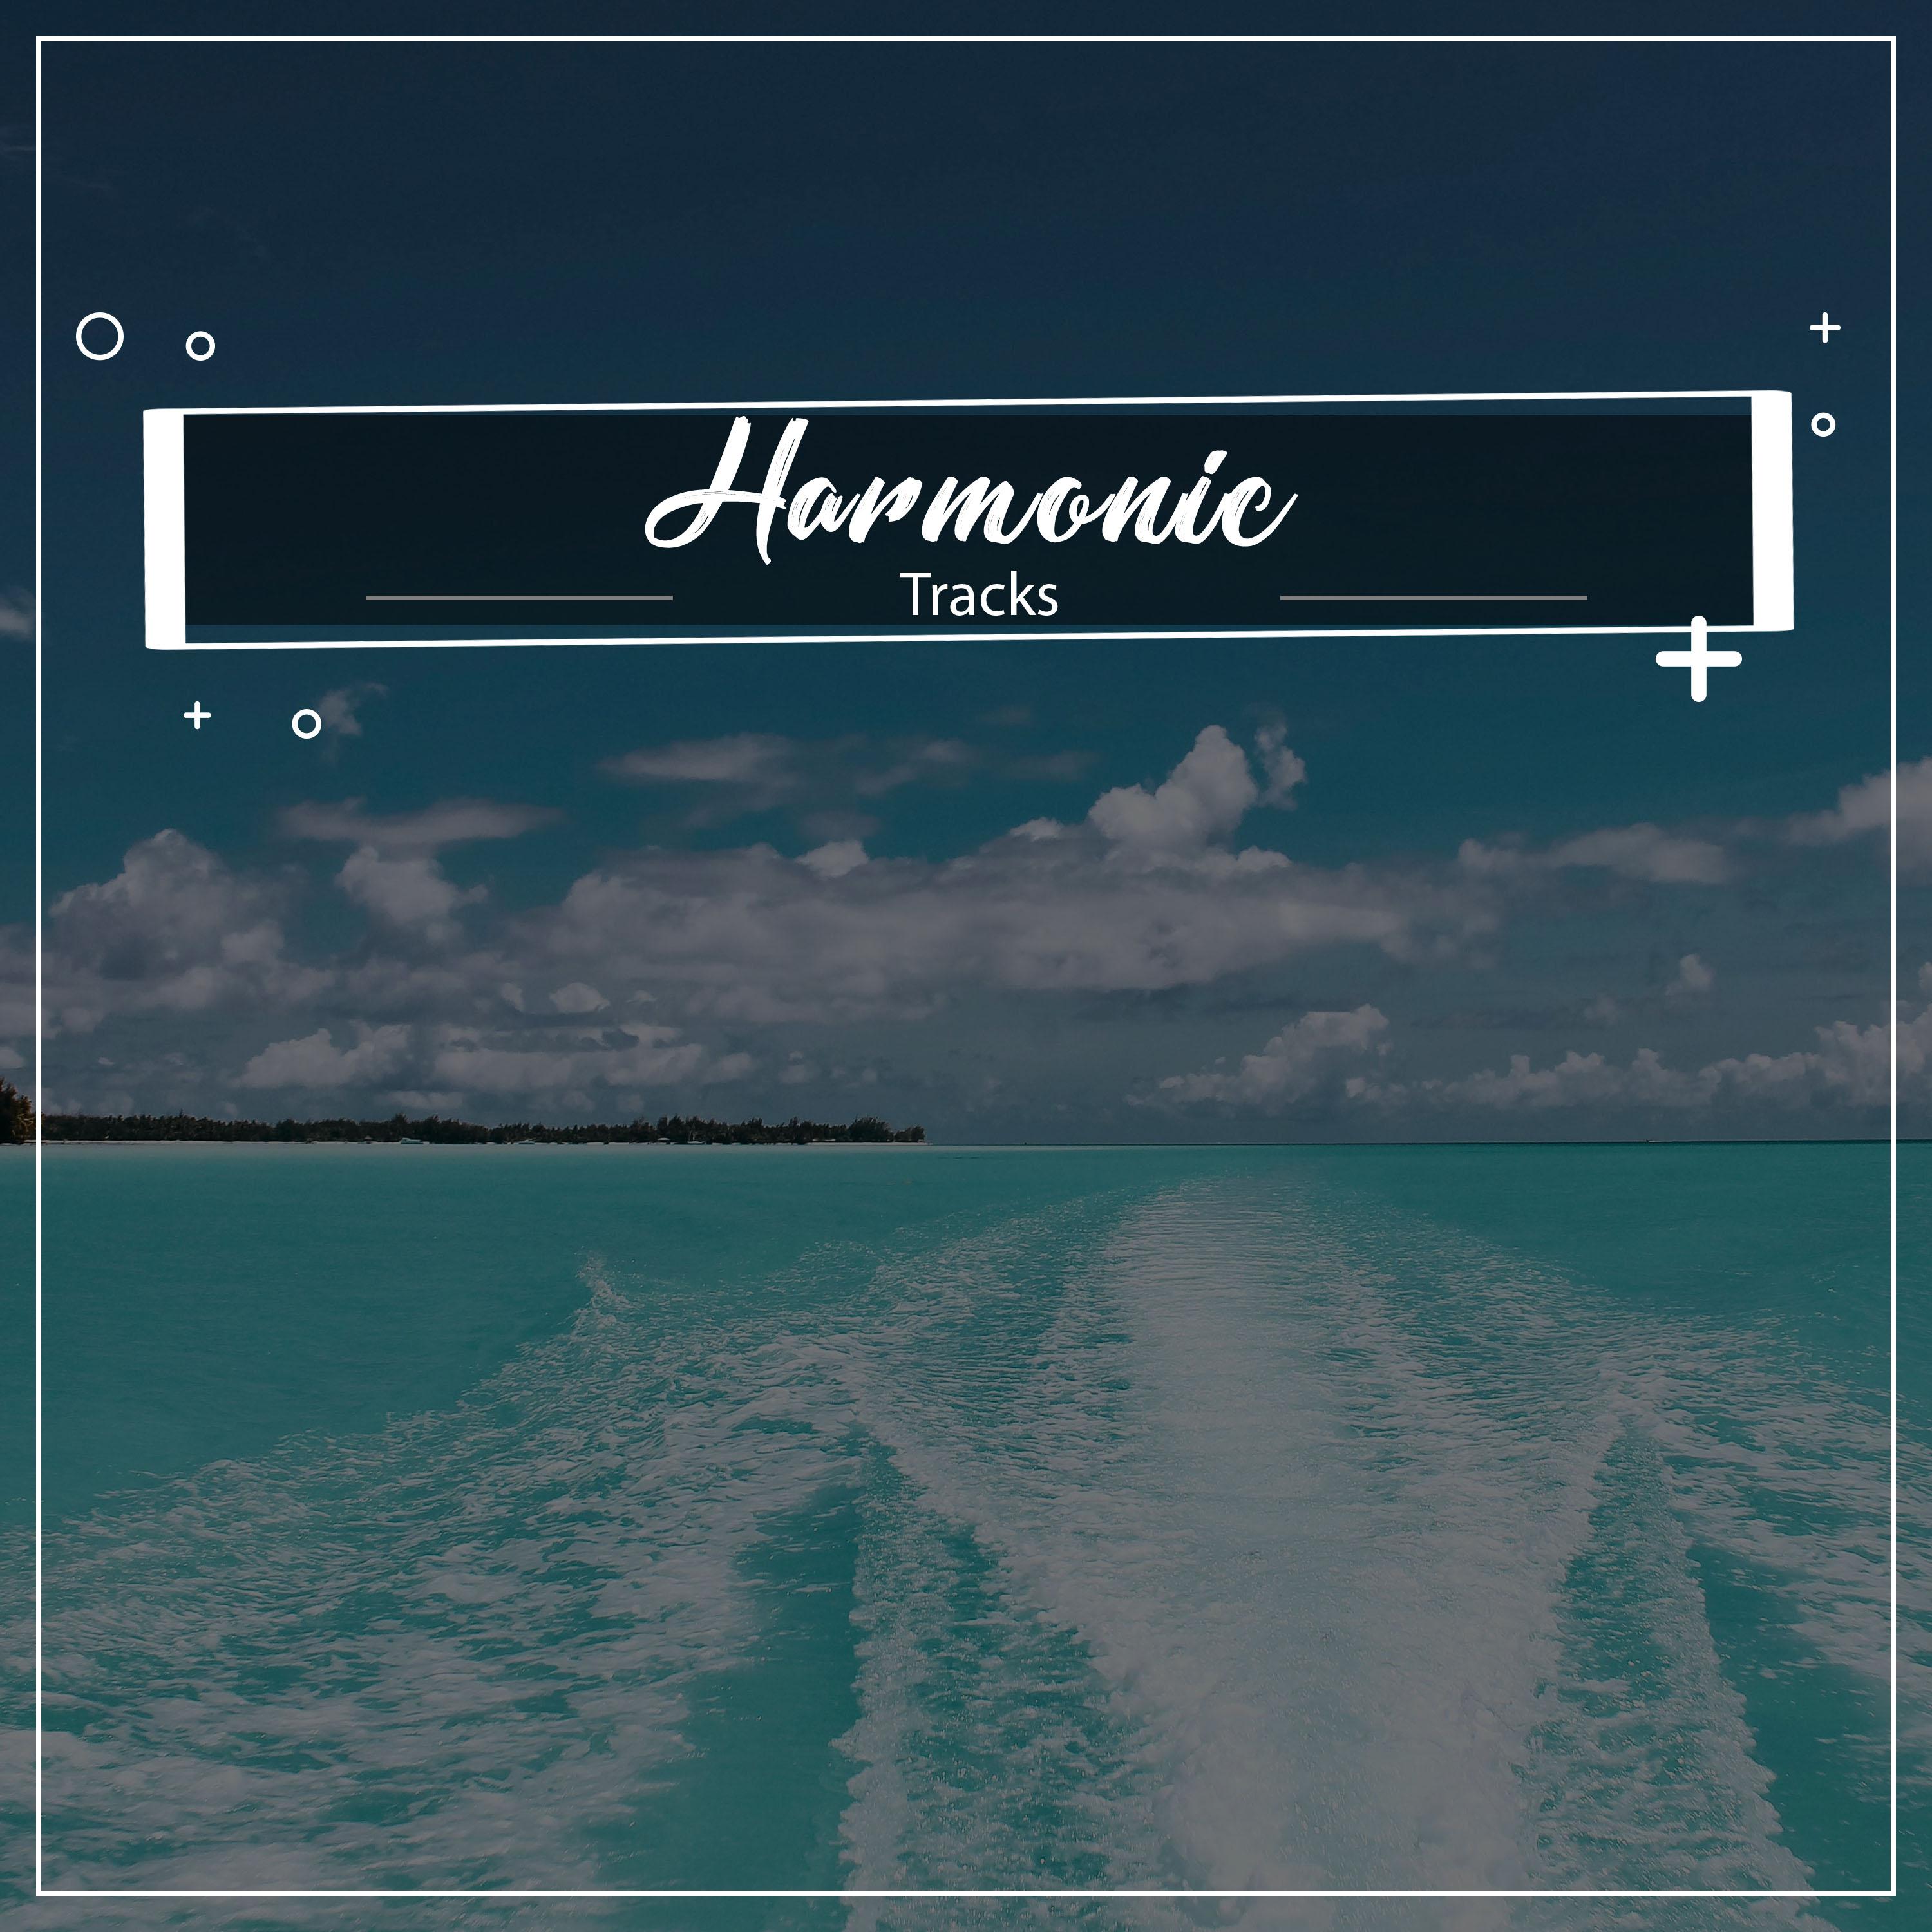 #12 Harmonic Tracks to Invigorate Body and Soul